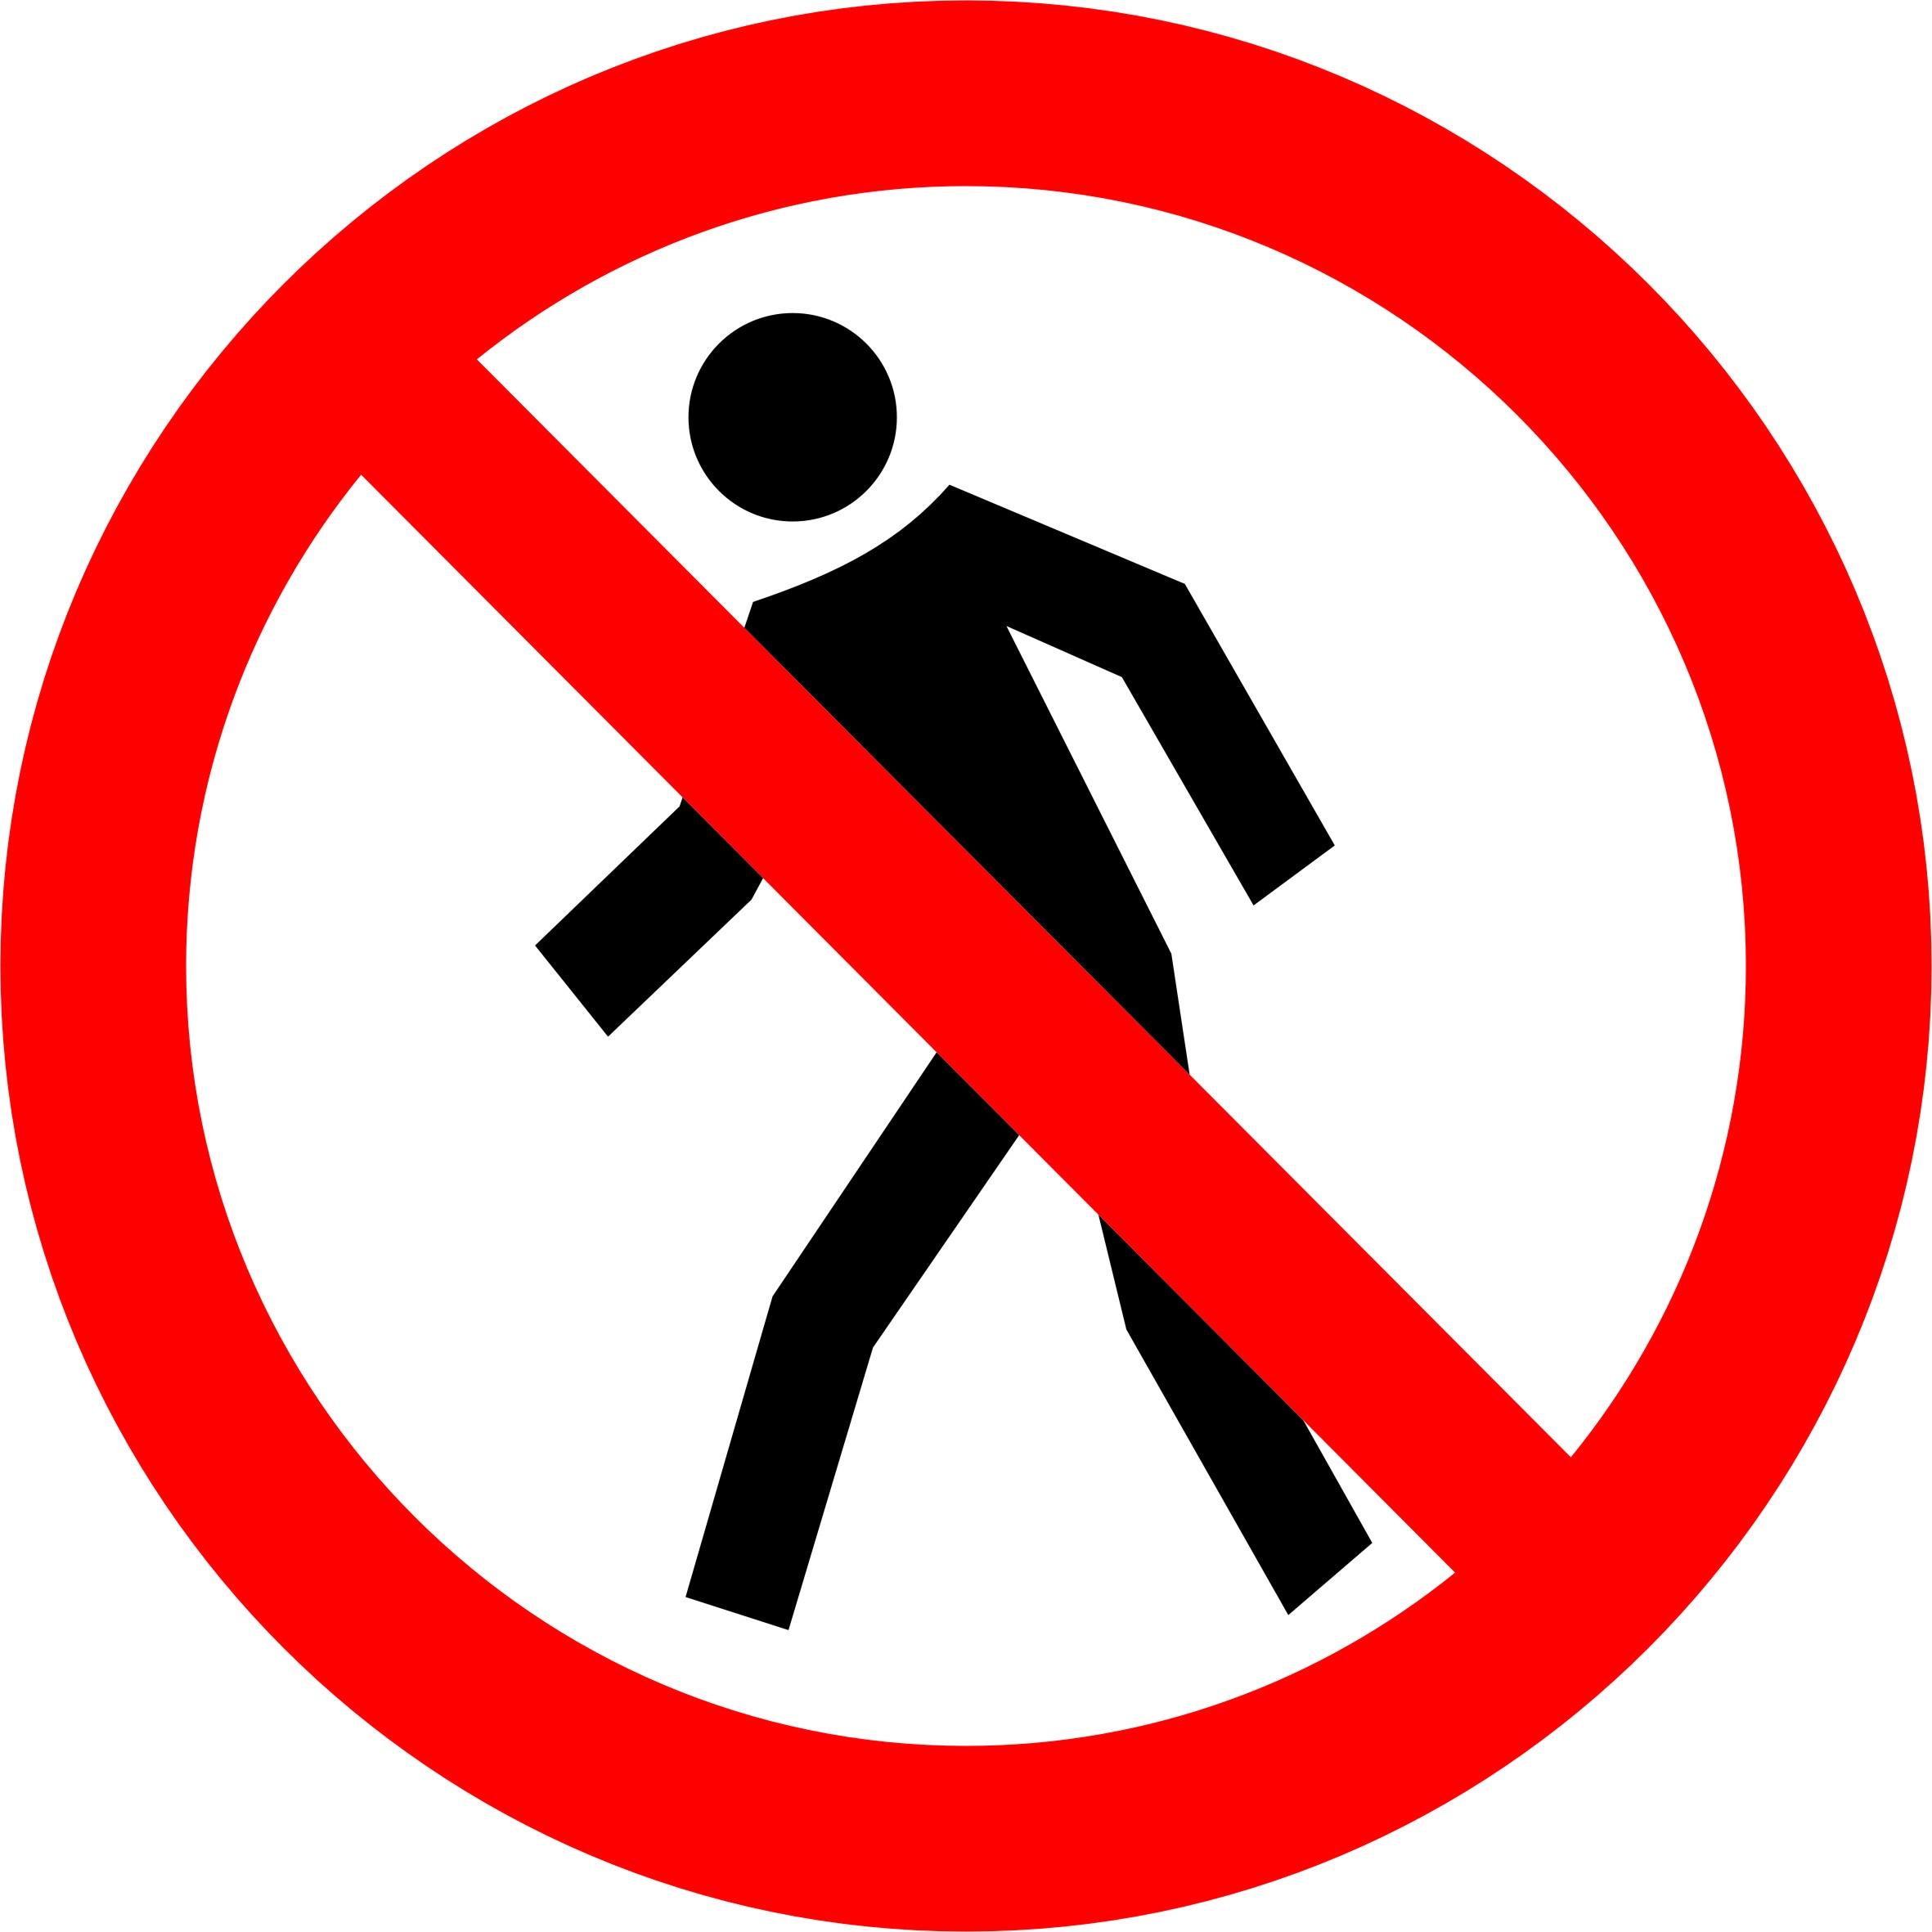 Проход запрещен. Знак (р 03) «проход запрещен». Наклейка информационный знак "проход запрещен" 200x200 мм Rexant. P03 знак безопасности. Табличка проход запрещен опасная зона.